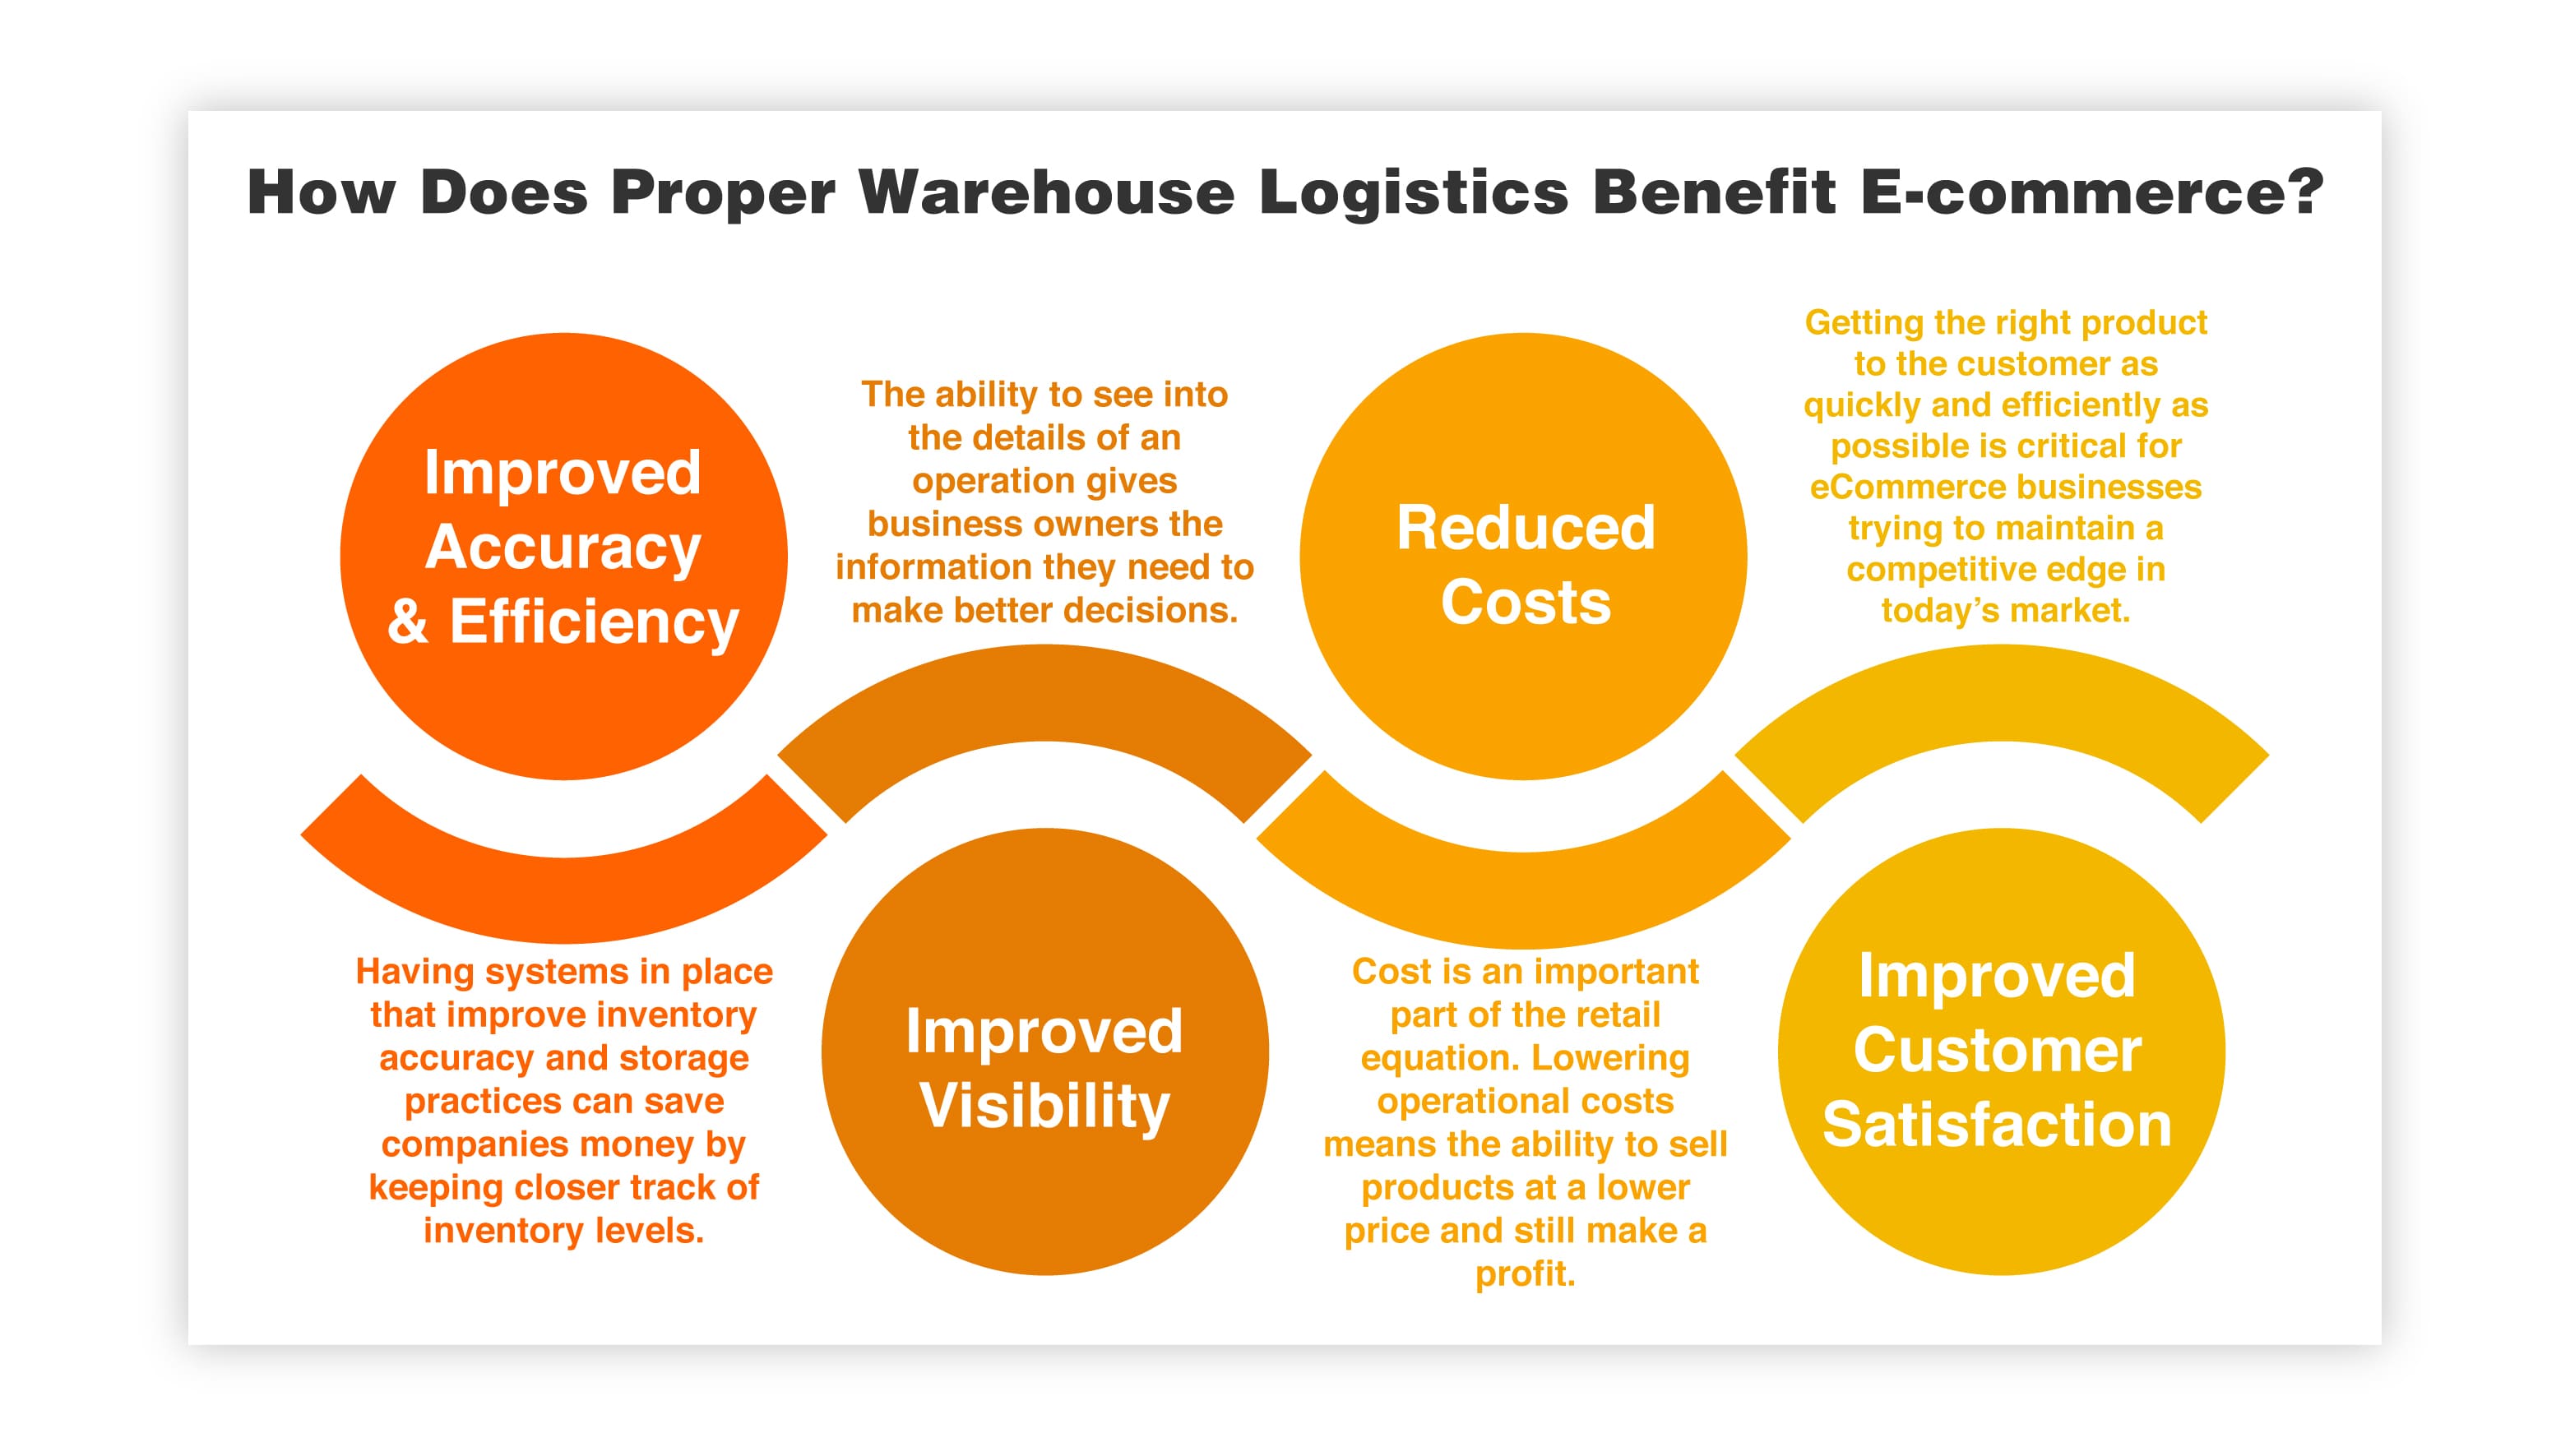 How Does Proper Warehouse Logistics Benefit E-commerce?